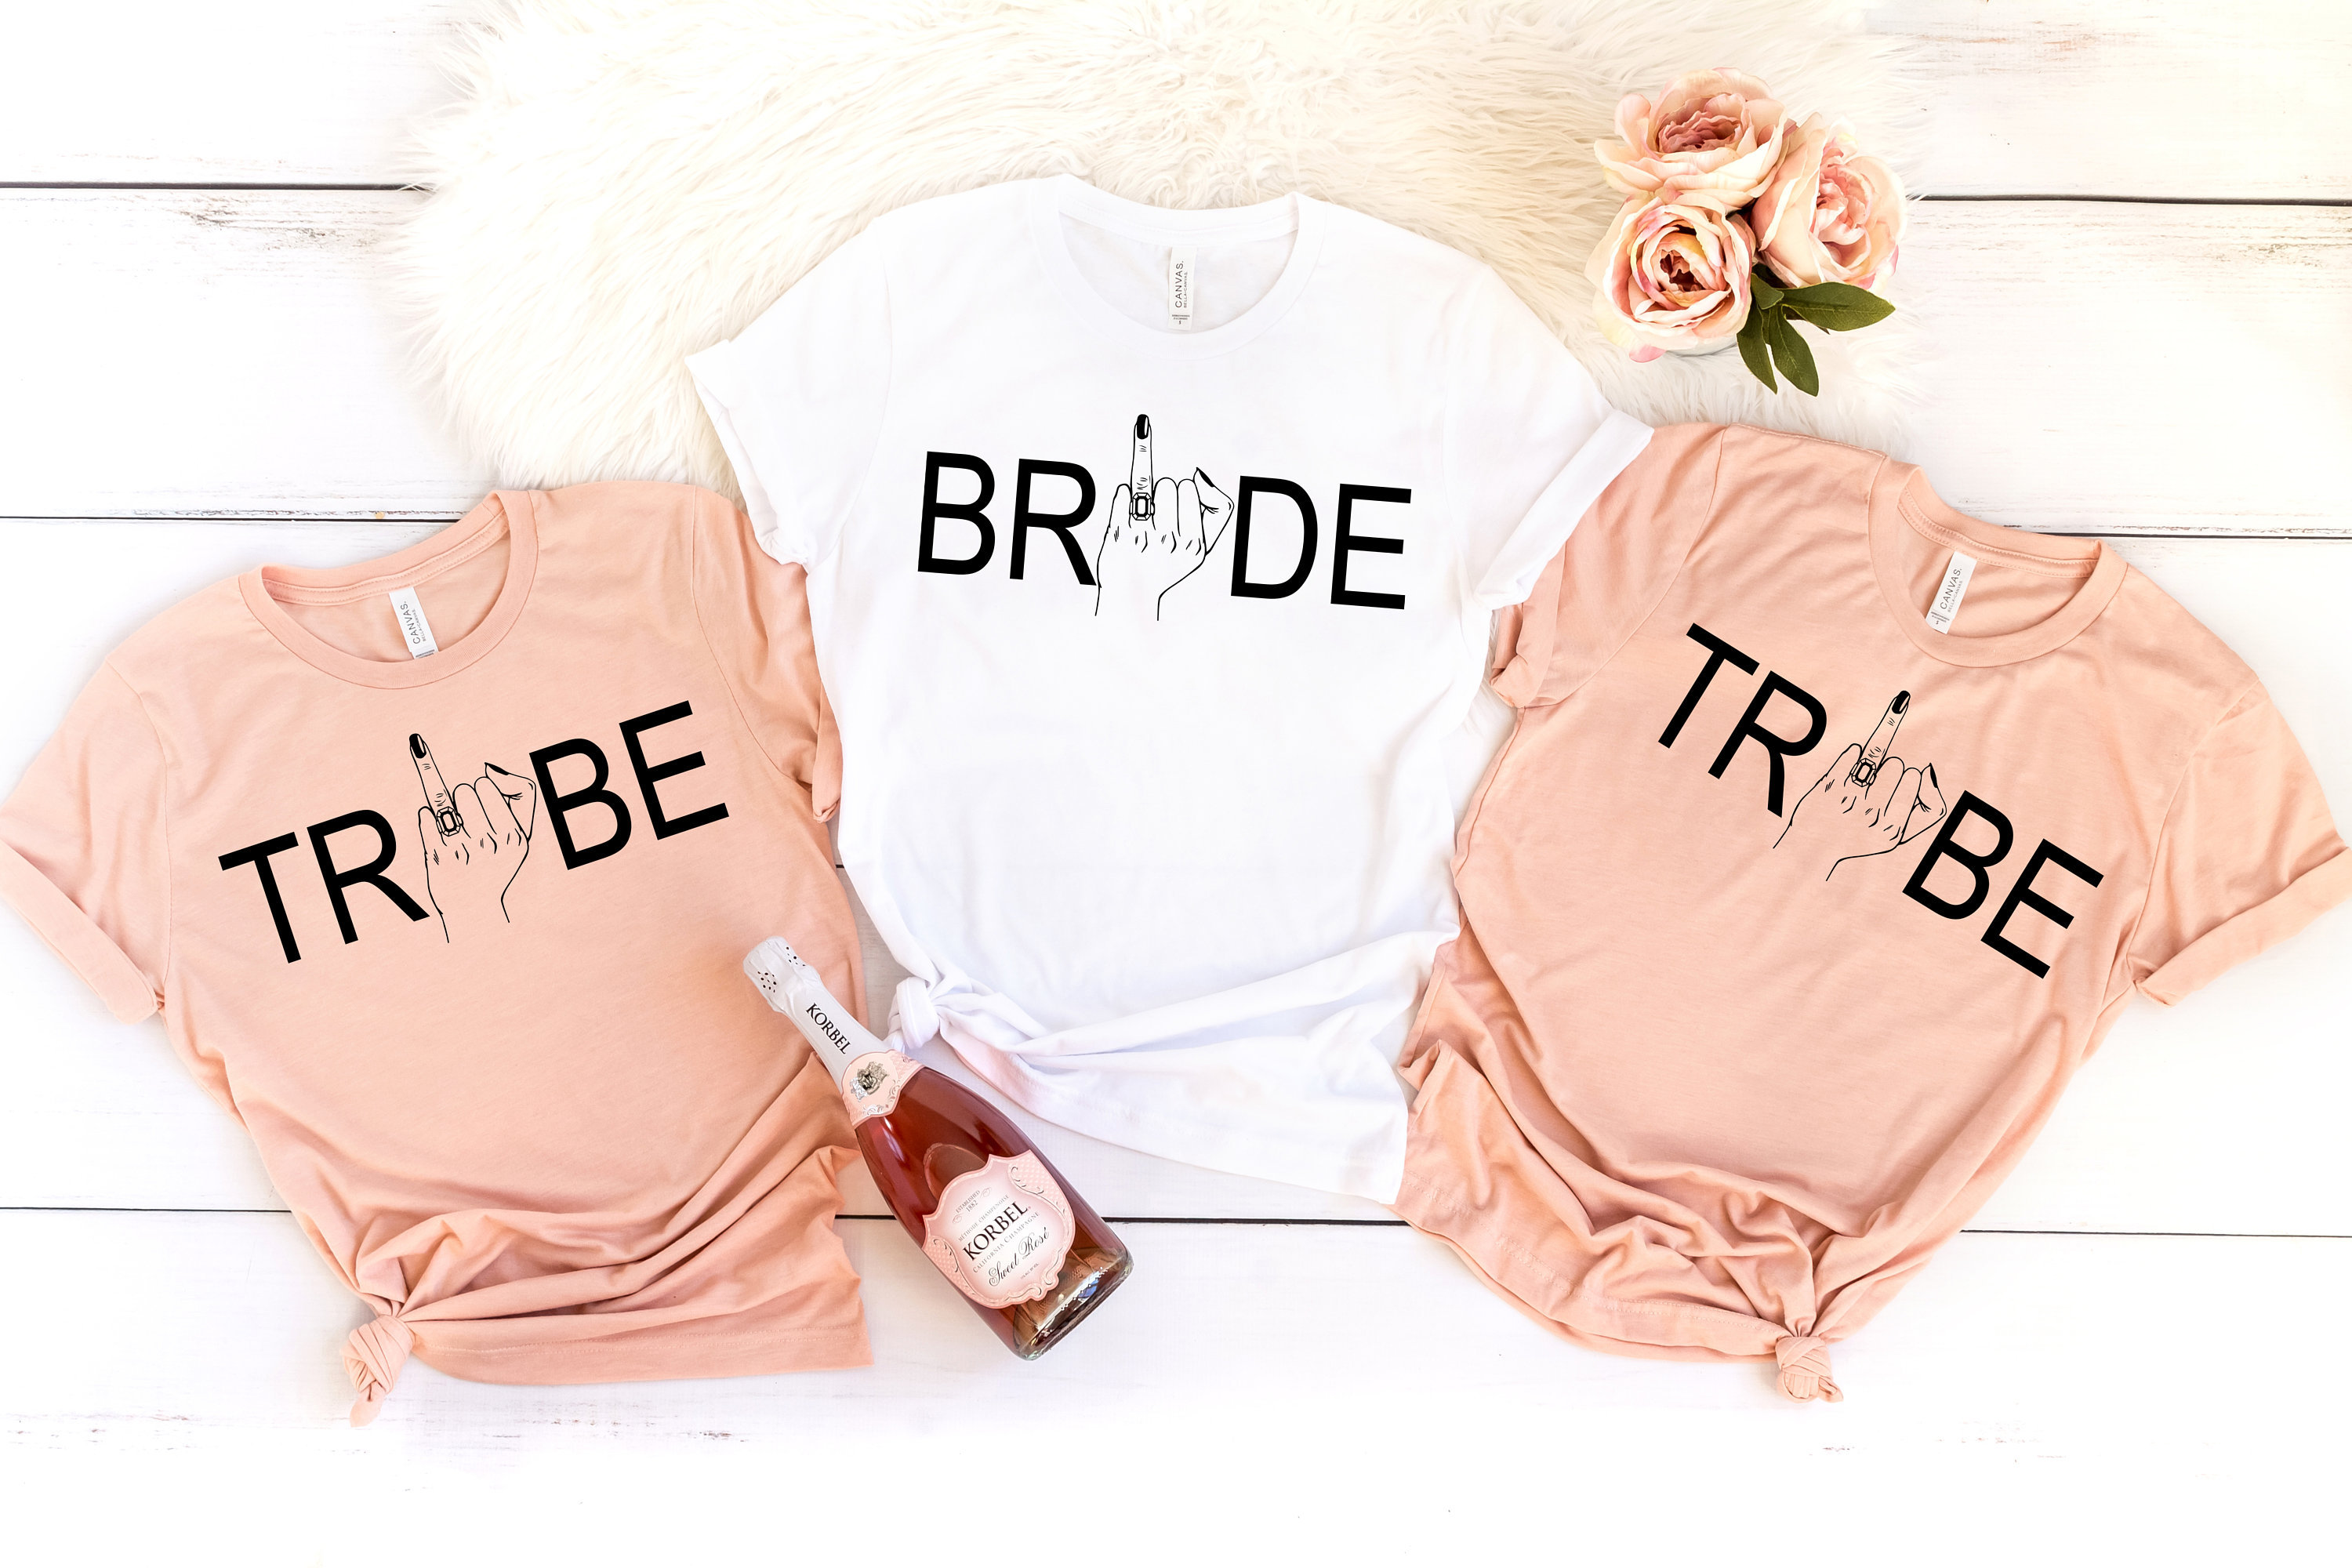 Bachelorette Party Bride Tribe Shirt Bachelorette shirts Bride Ring Shirt Bride And Tribe Shirts Ring Finger Shirts Bridal Party Shirt